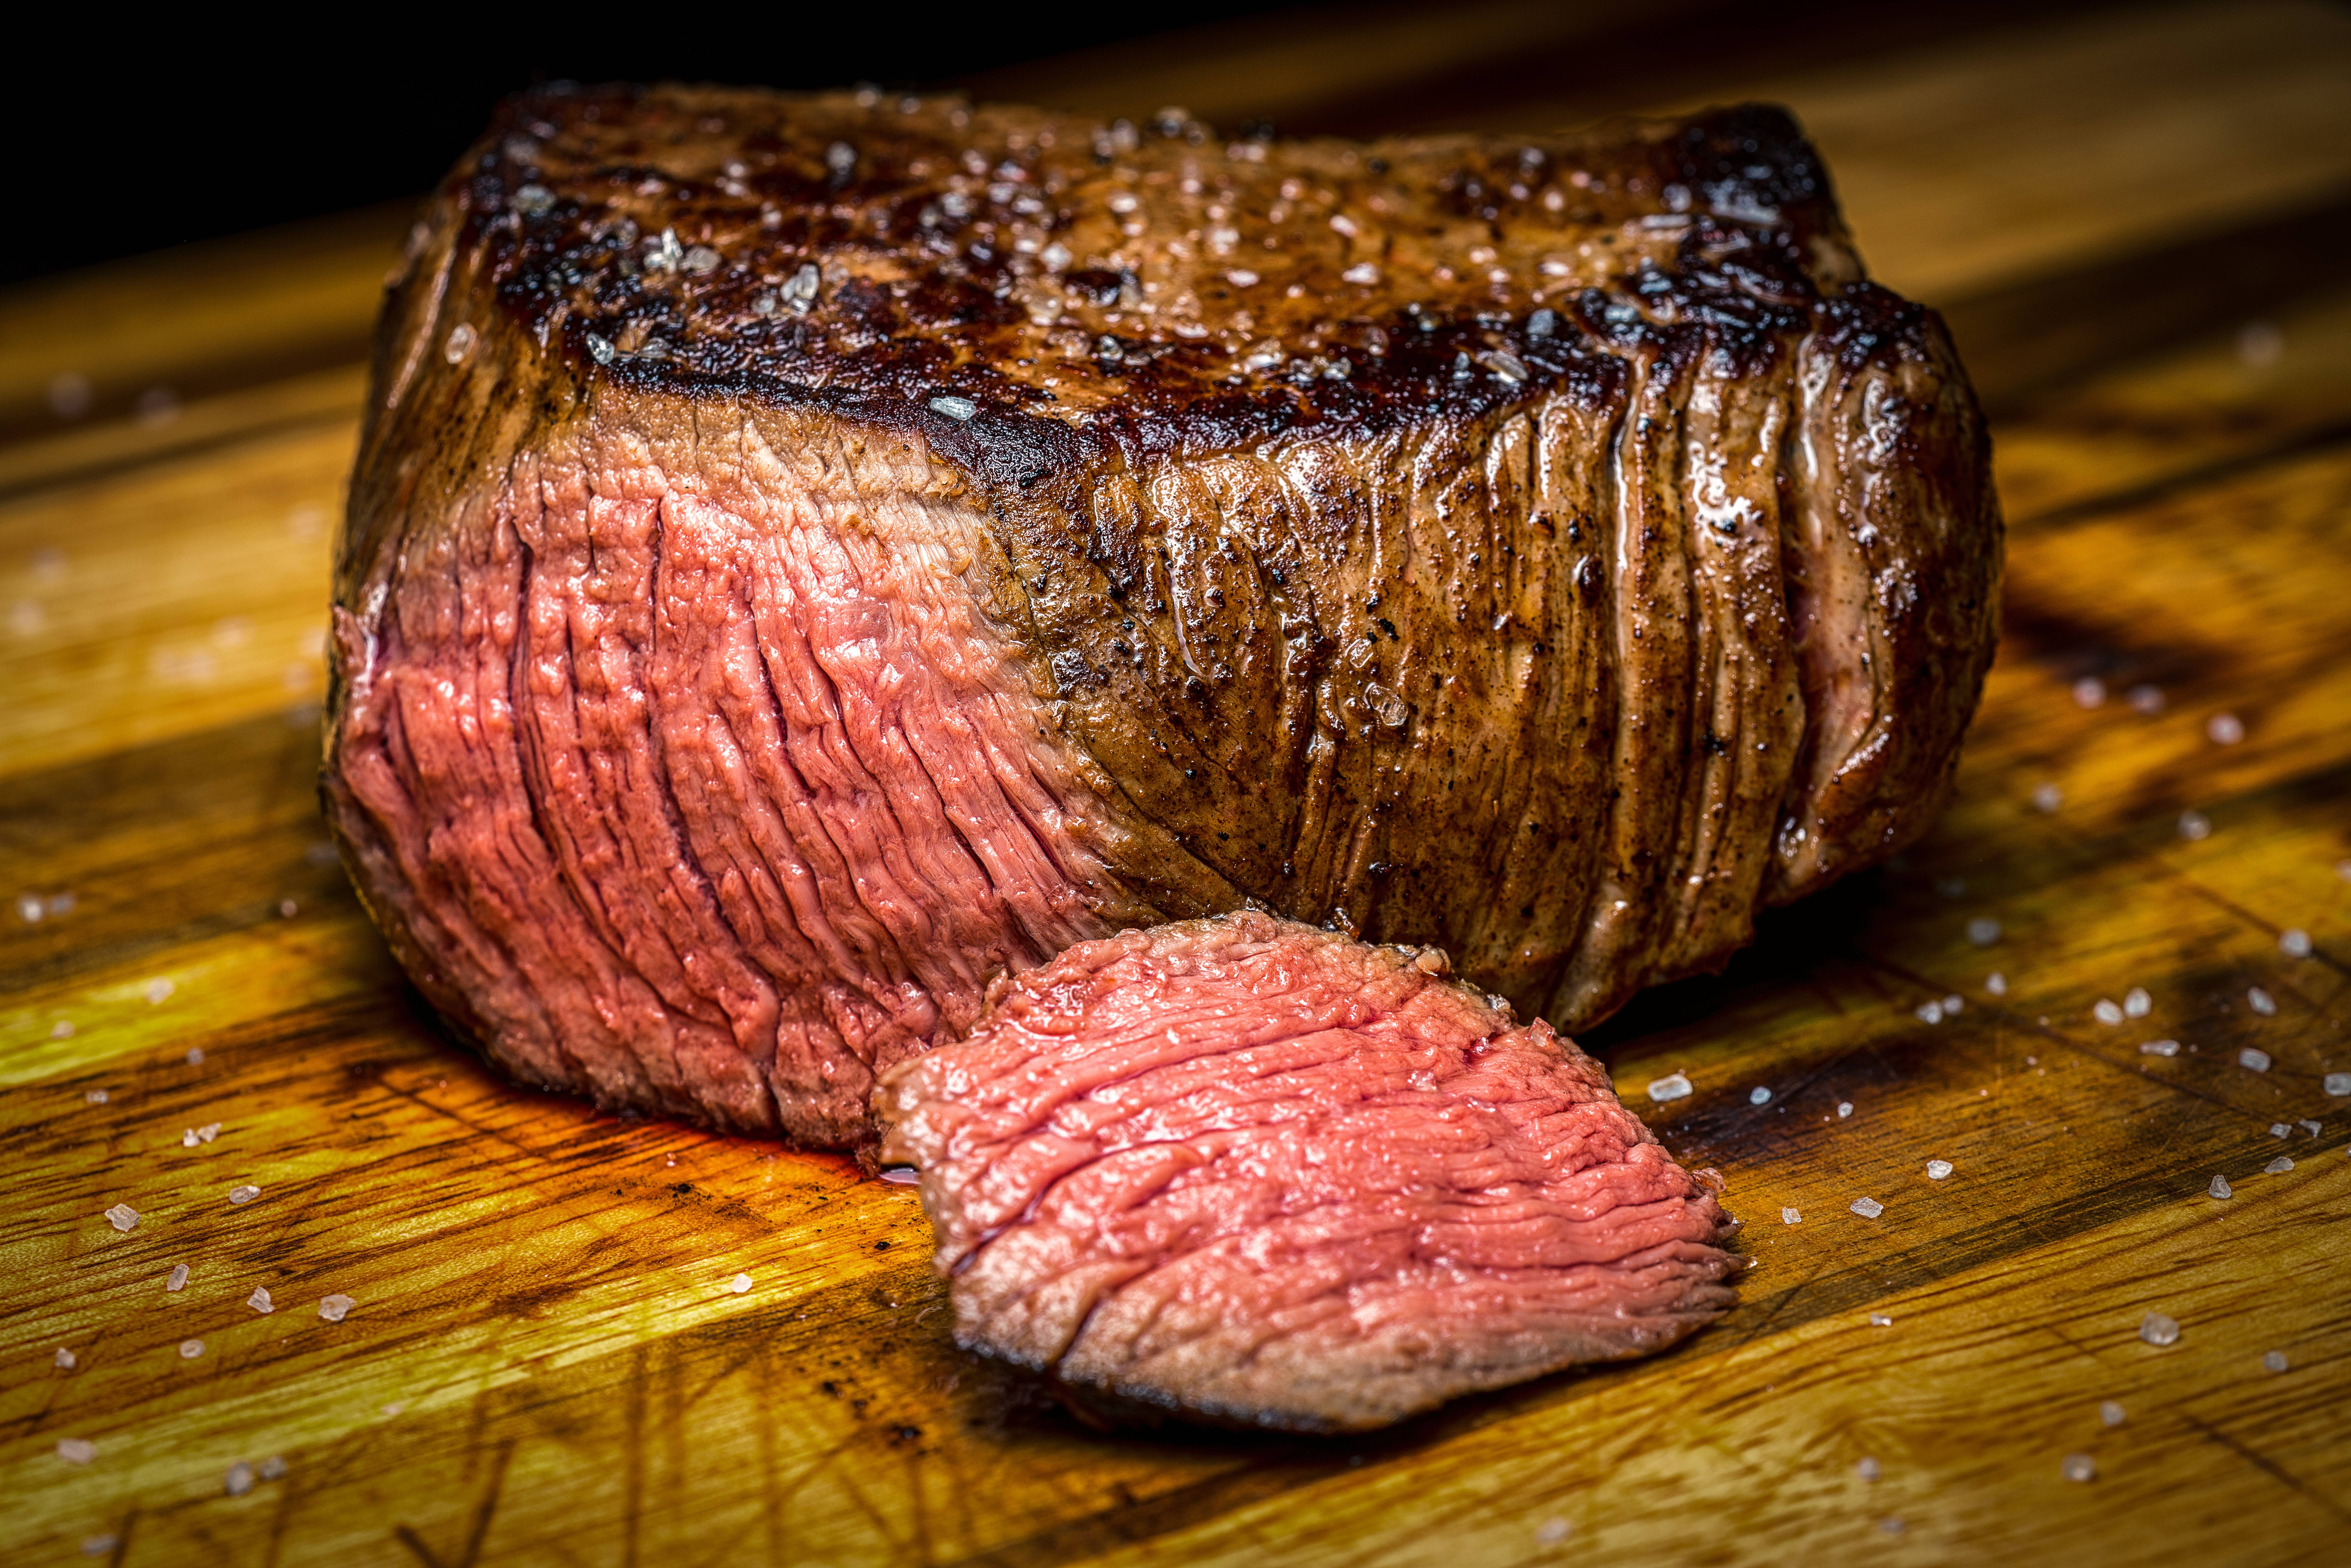 General 7952x5304 meat food closeup steak depth of field flesh salt wooden surface cutting board